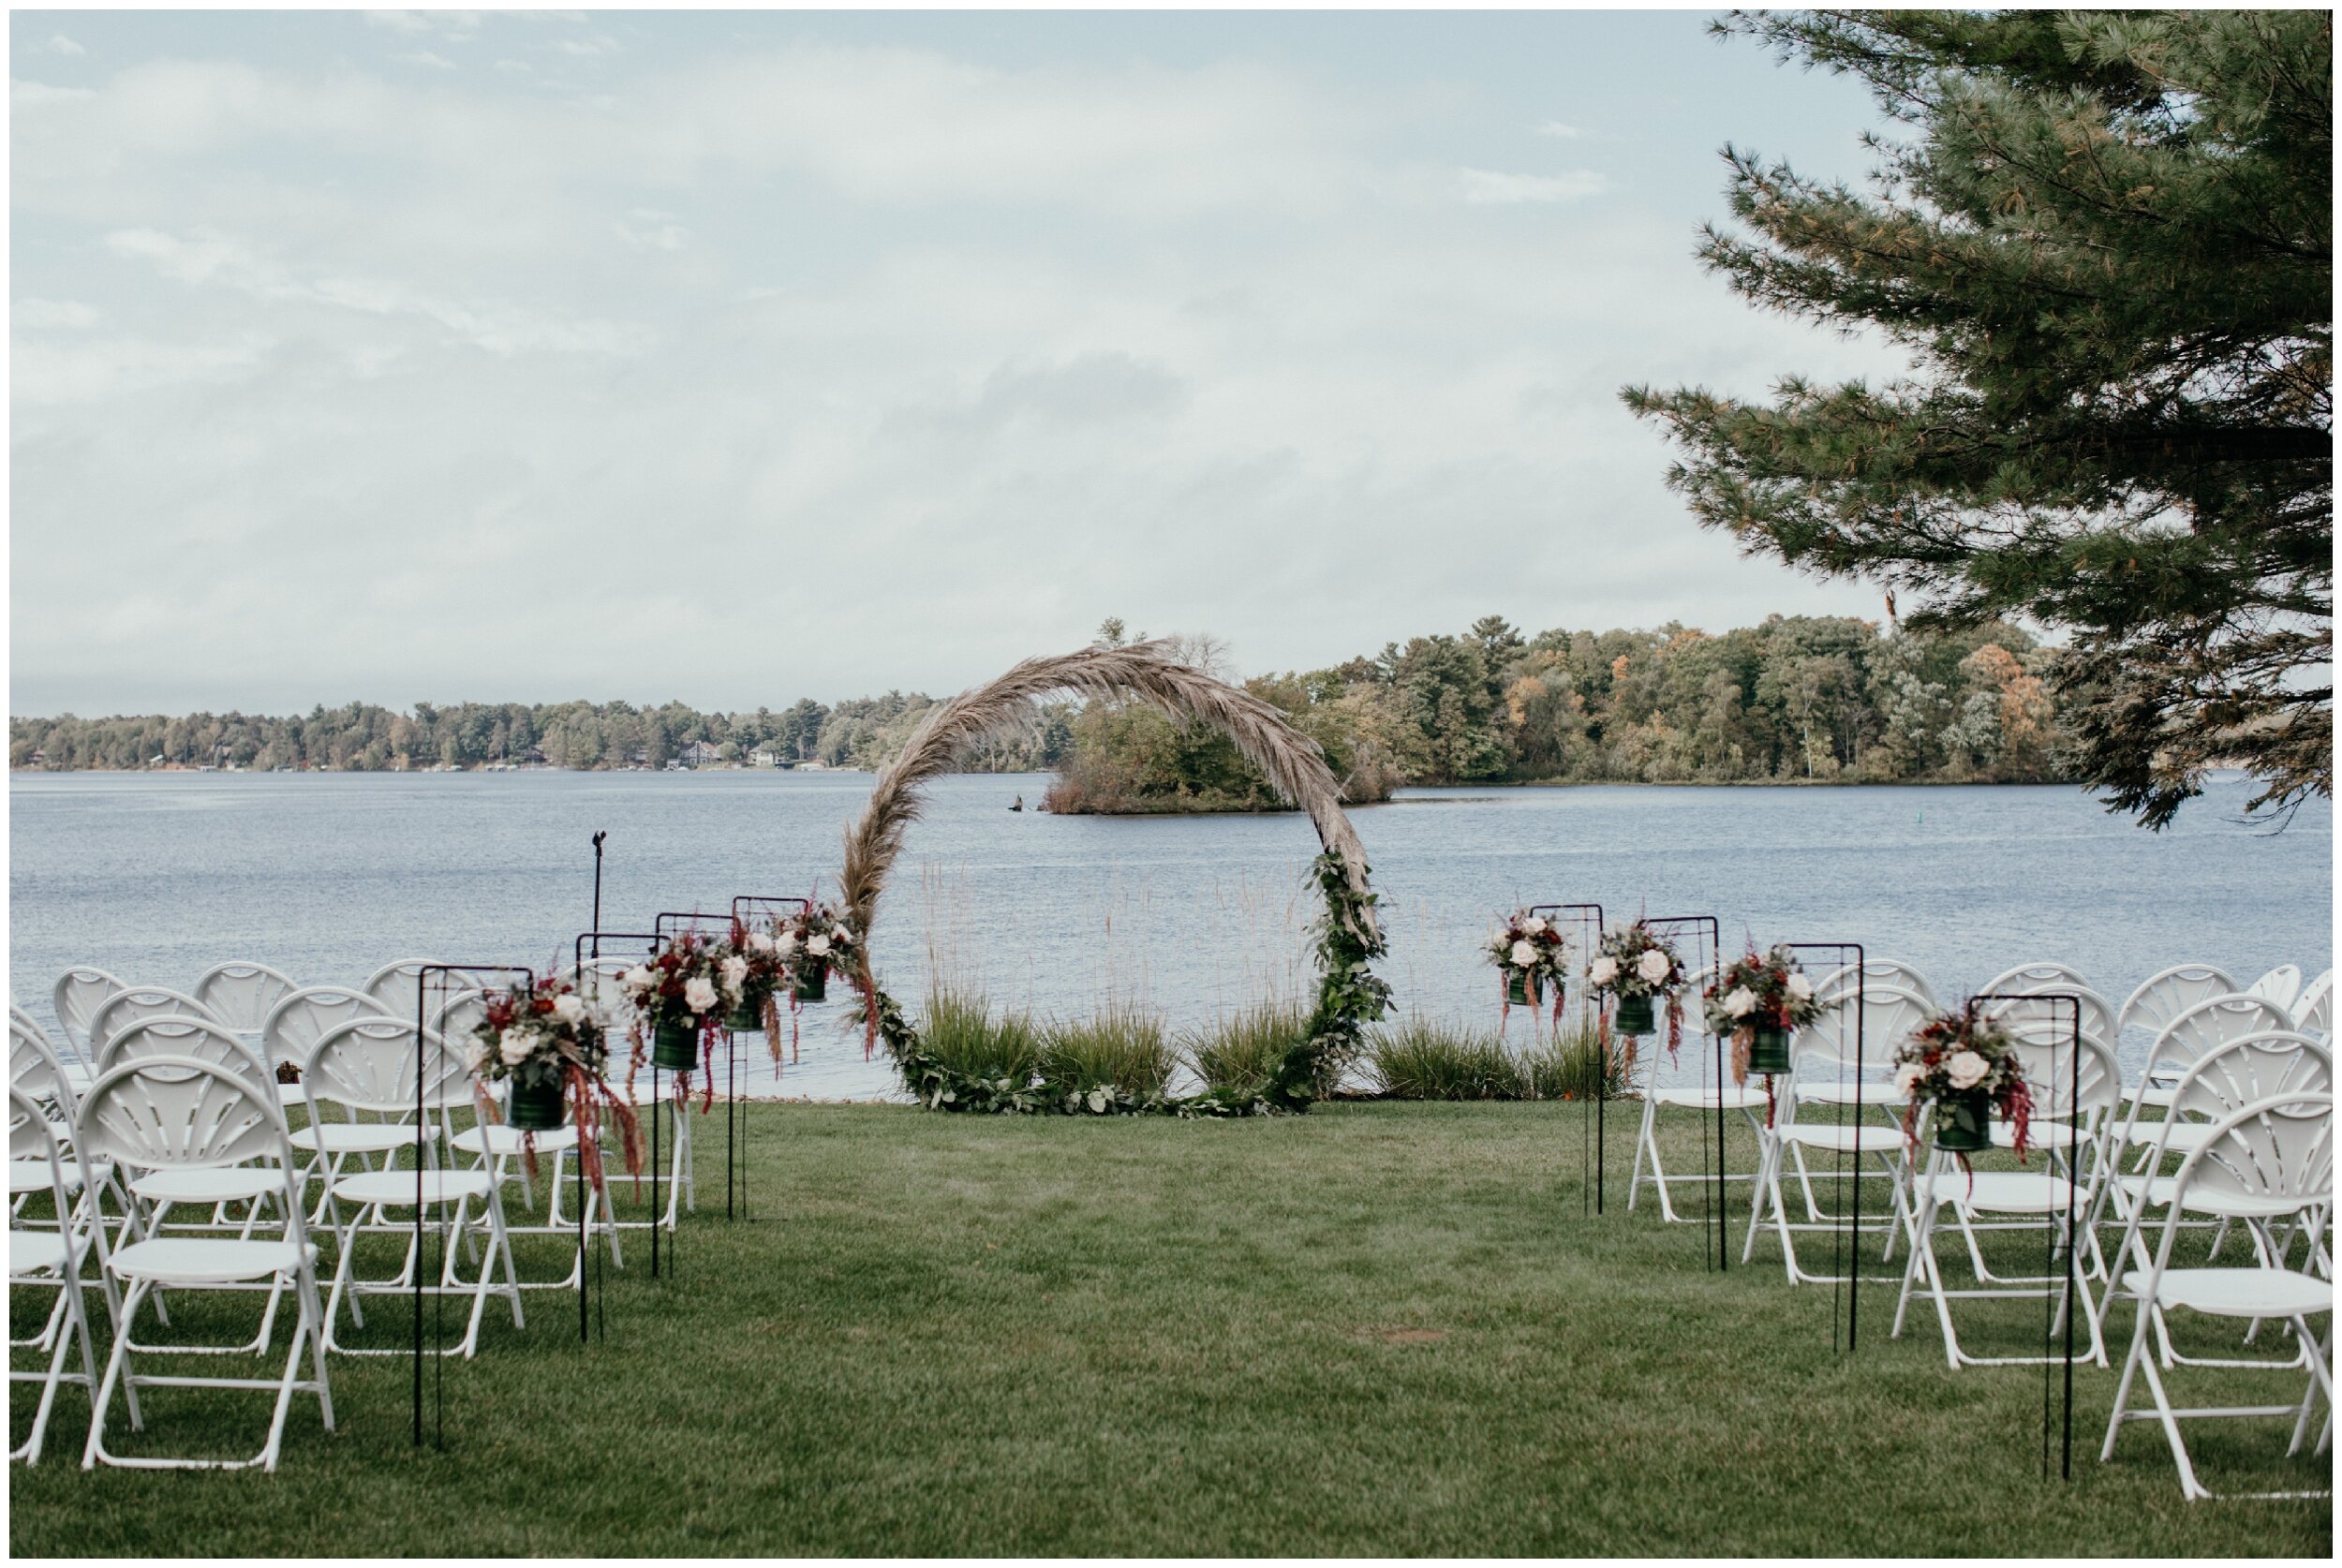 Lakeside wedding ceremony in Crosslake, Minnesota